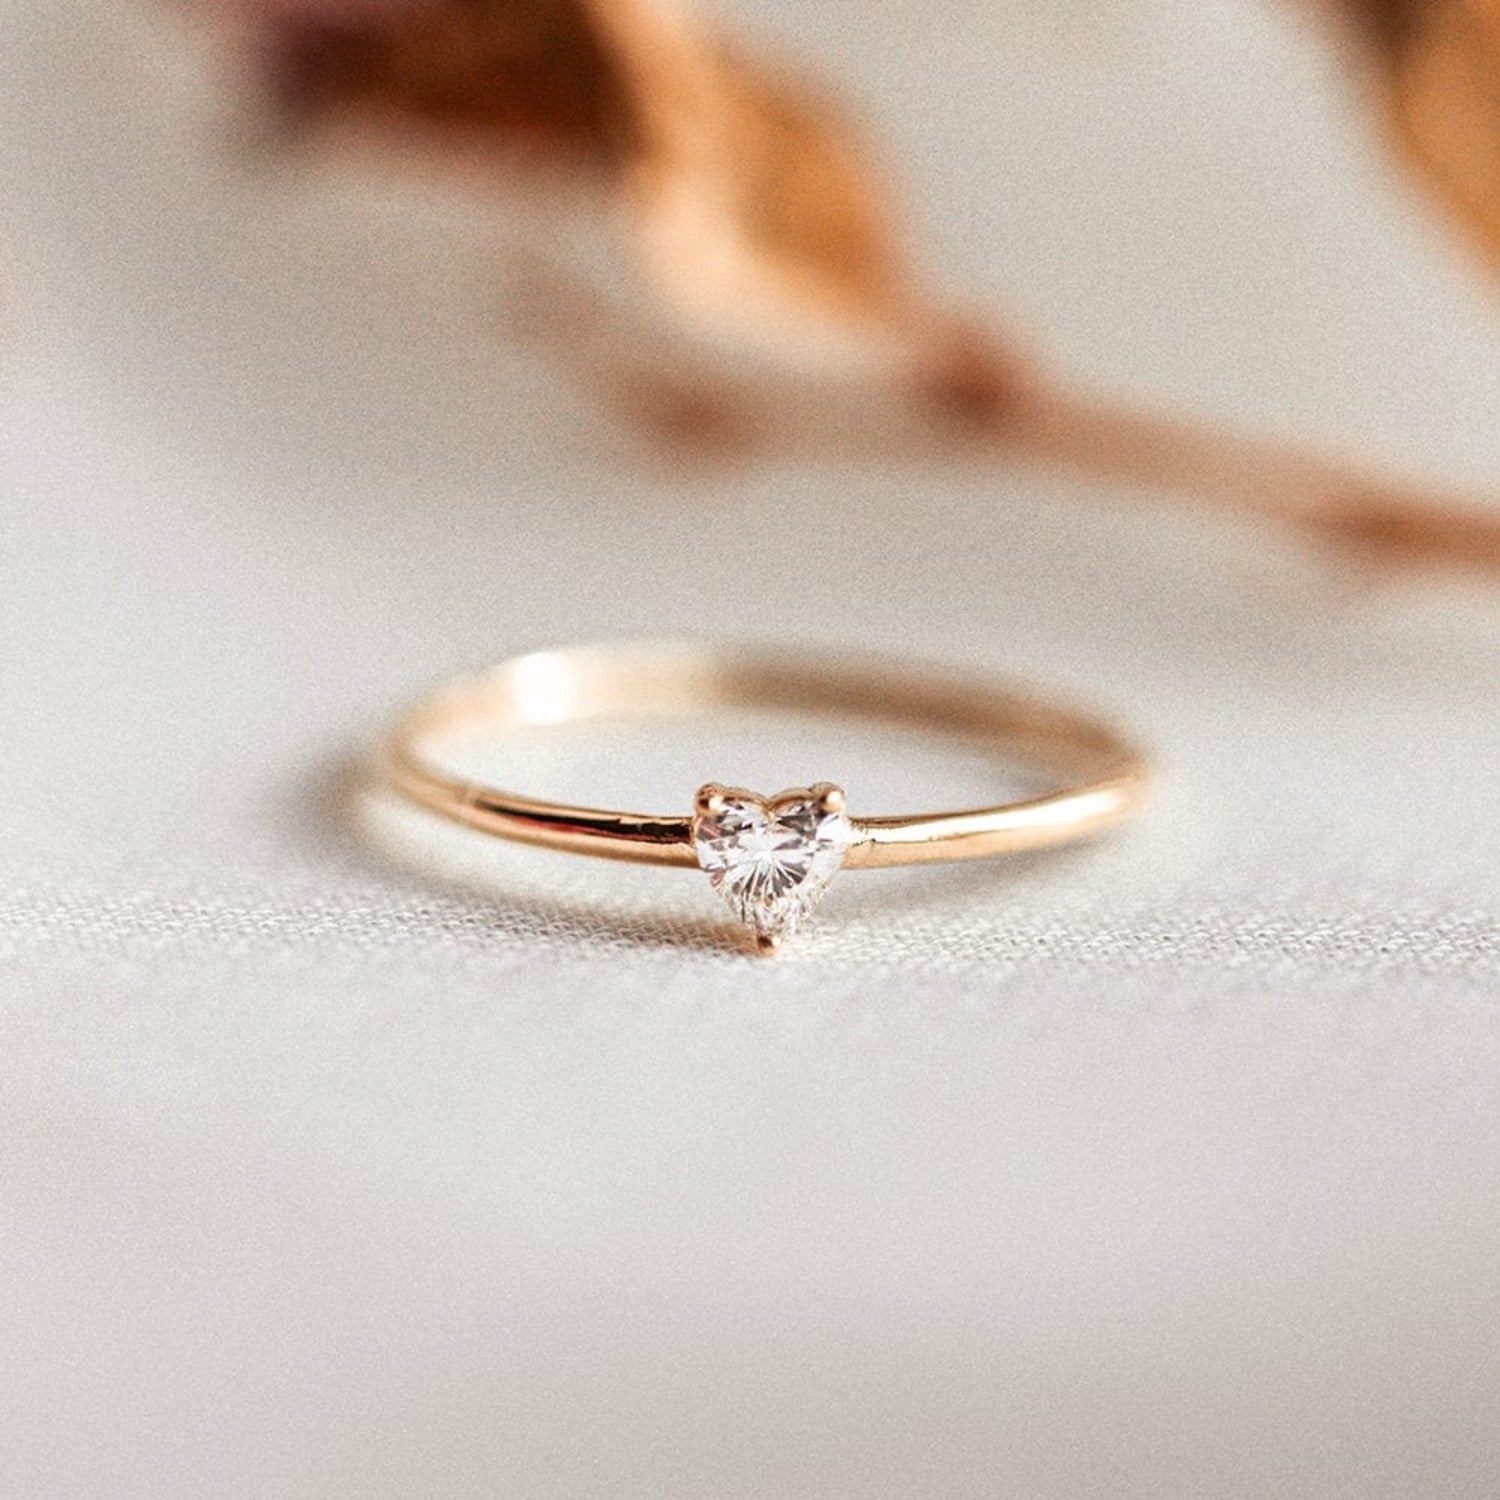 14K White Gold Heart Diamond Engagement Ring - Unique GalaxyGems Bridal  Jewelry Gift